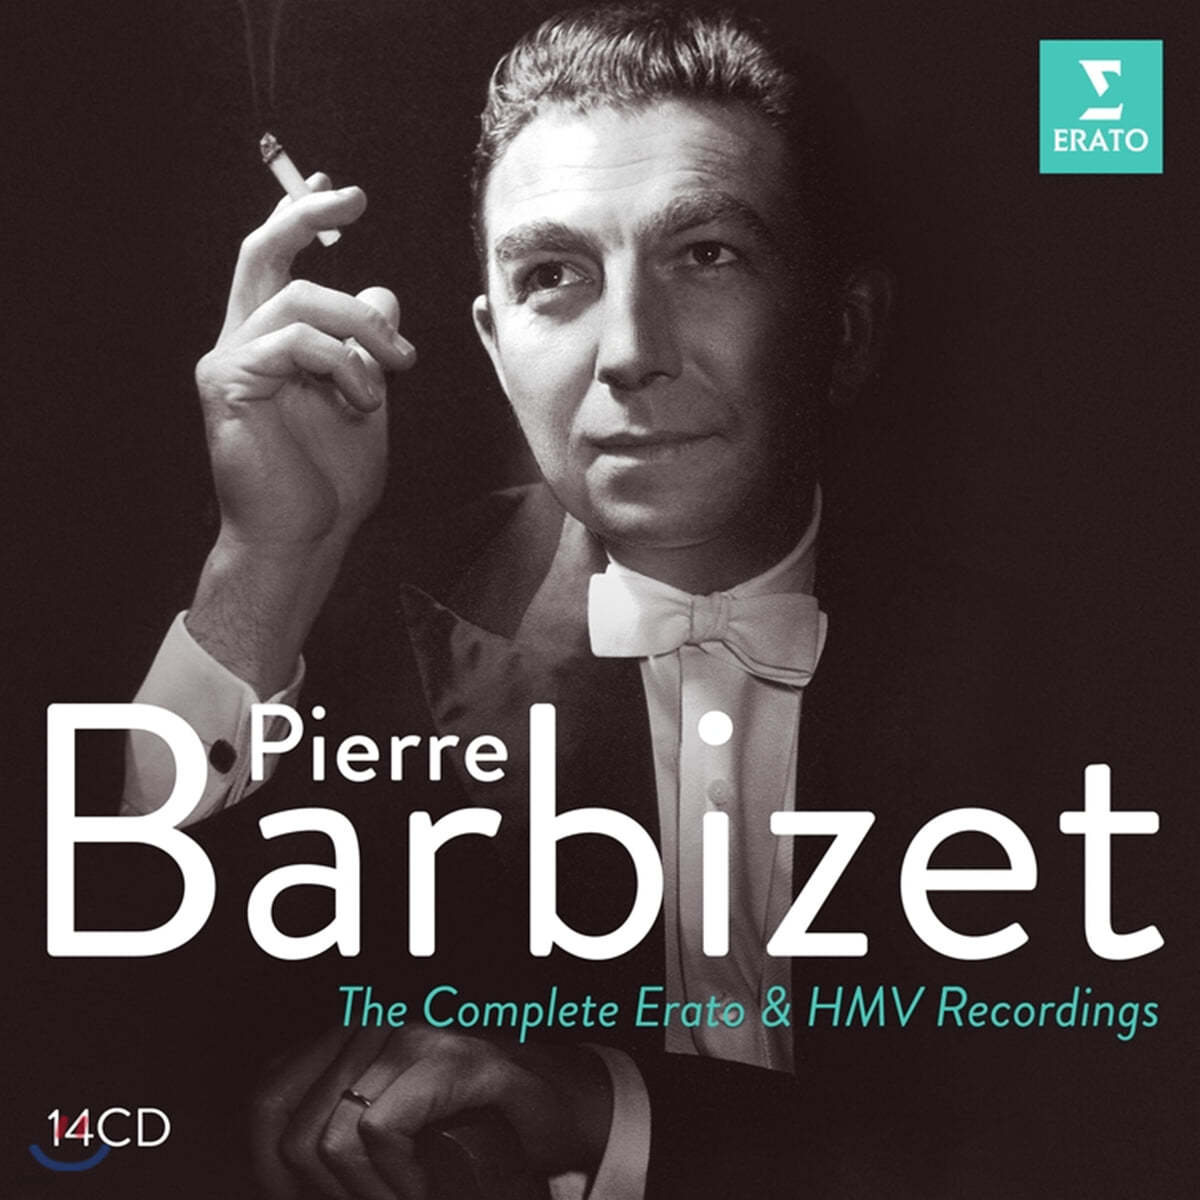 Pierre Barbizet 피에르 바르비제 에라토 녹음 전집 (The Complete Erato & HMV Recordings) 